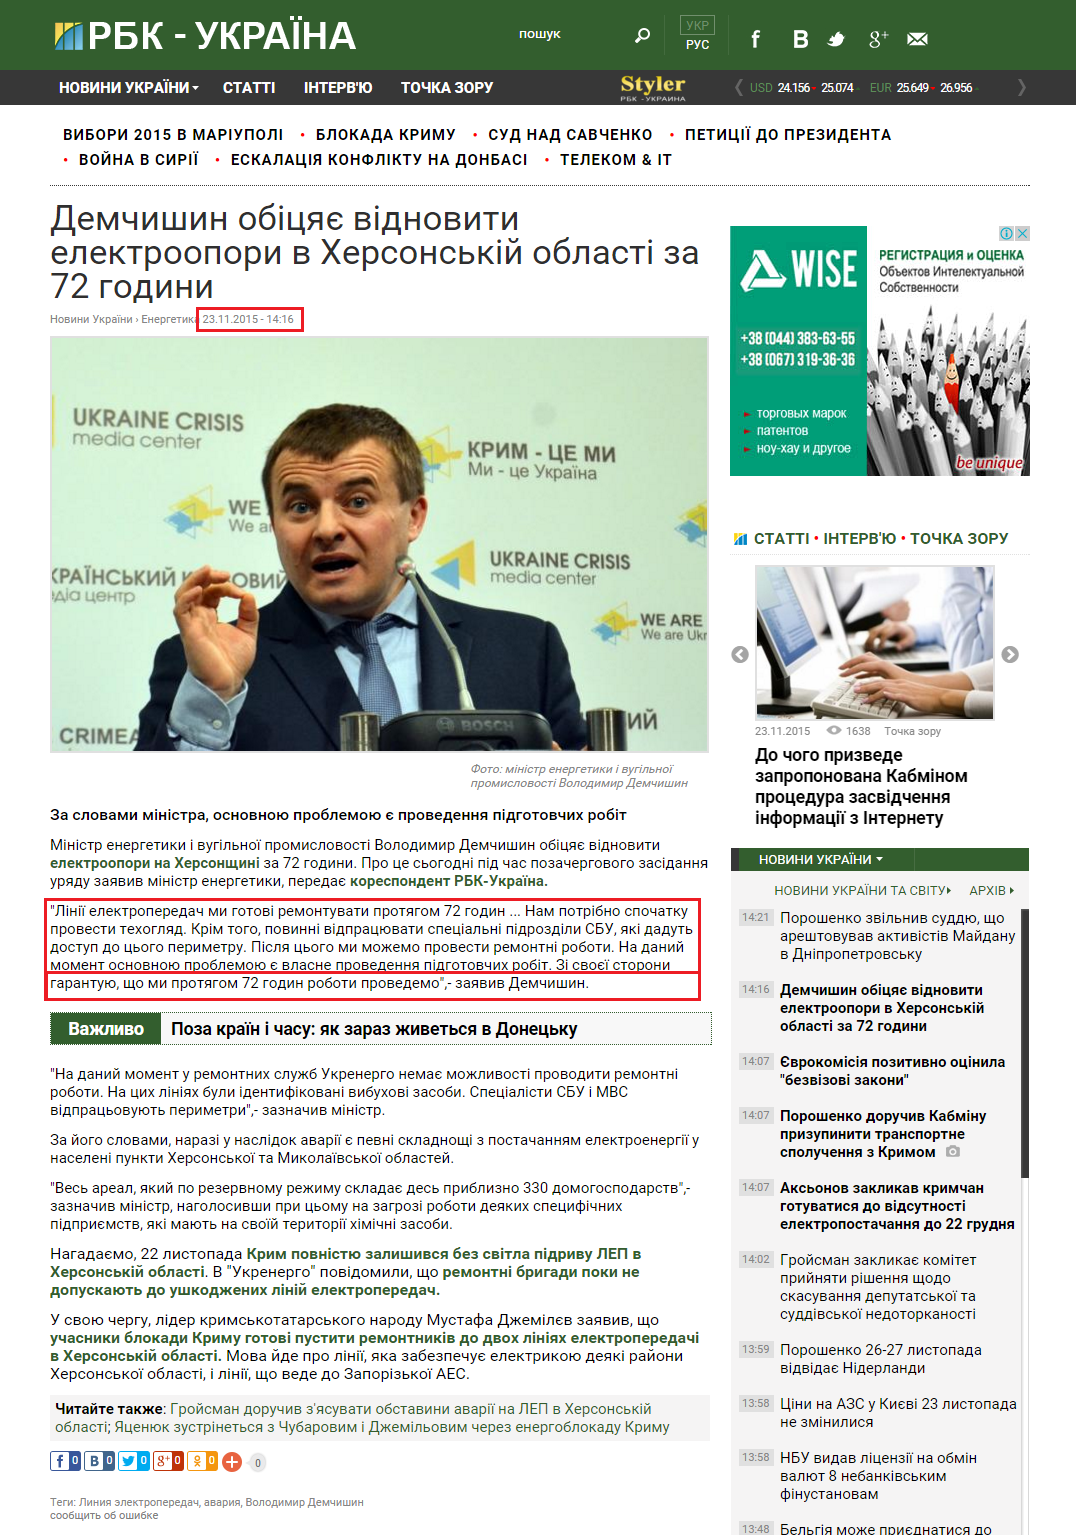 http://www.rbc.ua/ukr/news/demchishin-obeshchaet-vosstanovit-elektroopory-1448281015.html